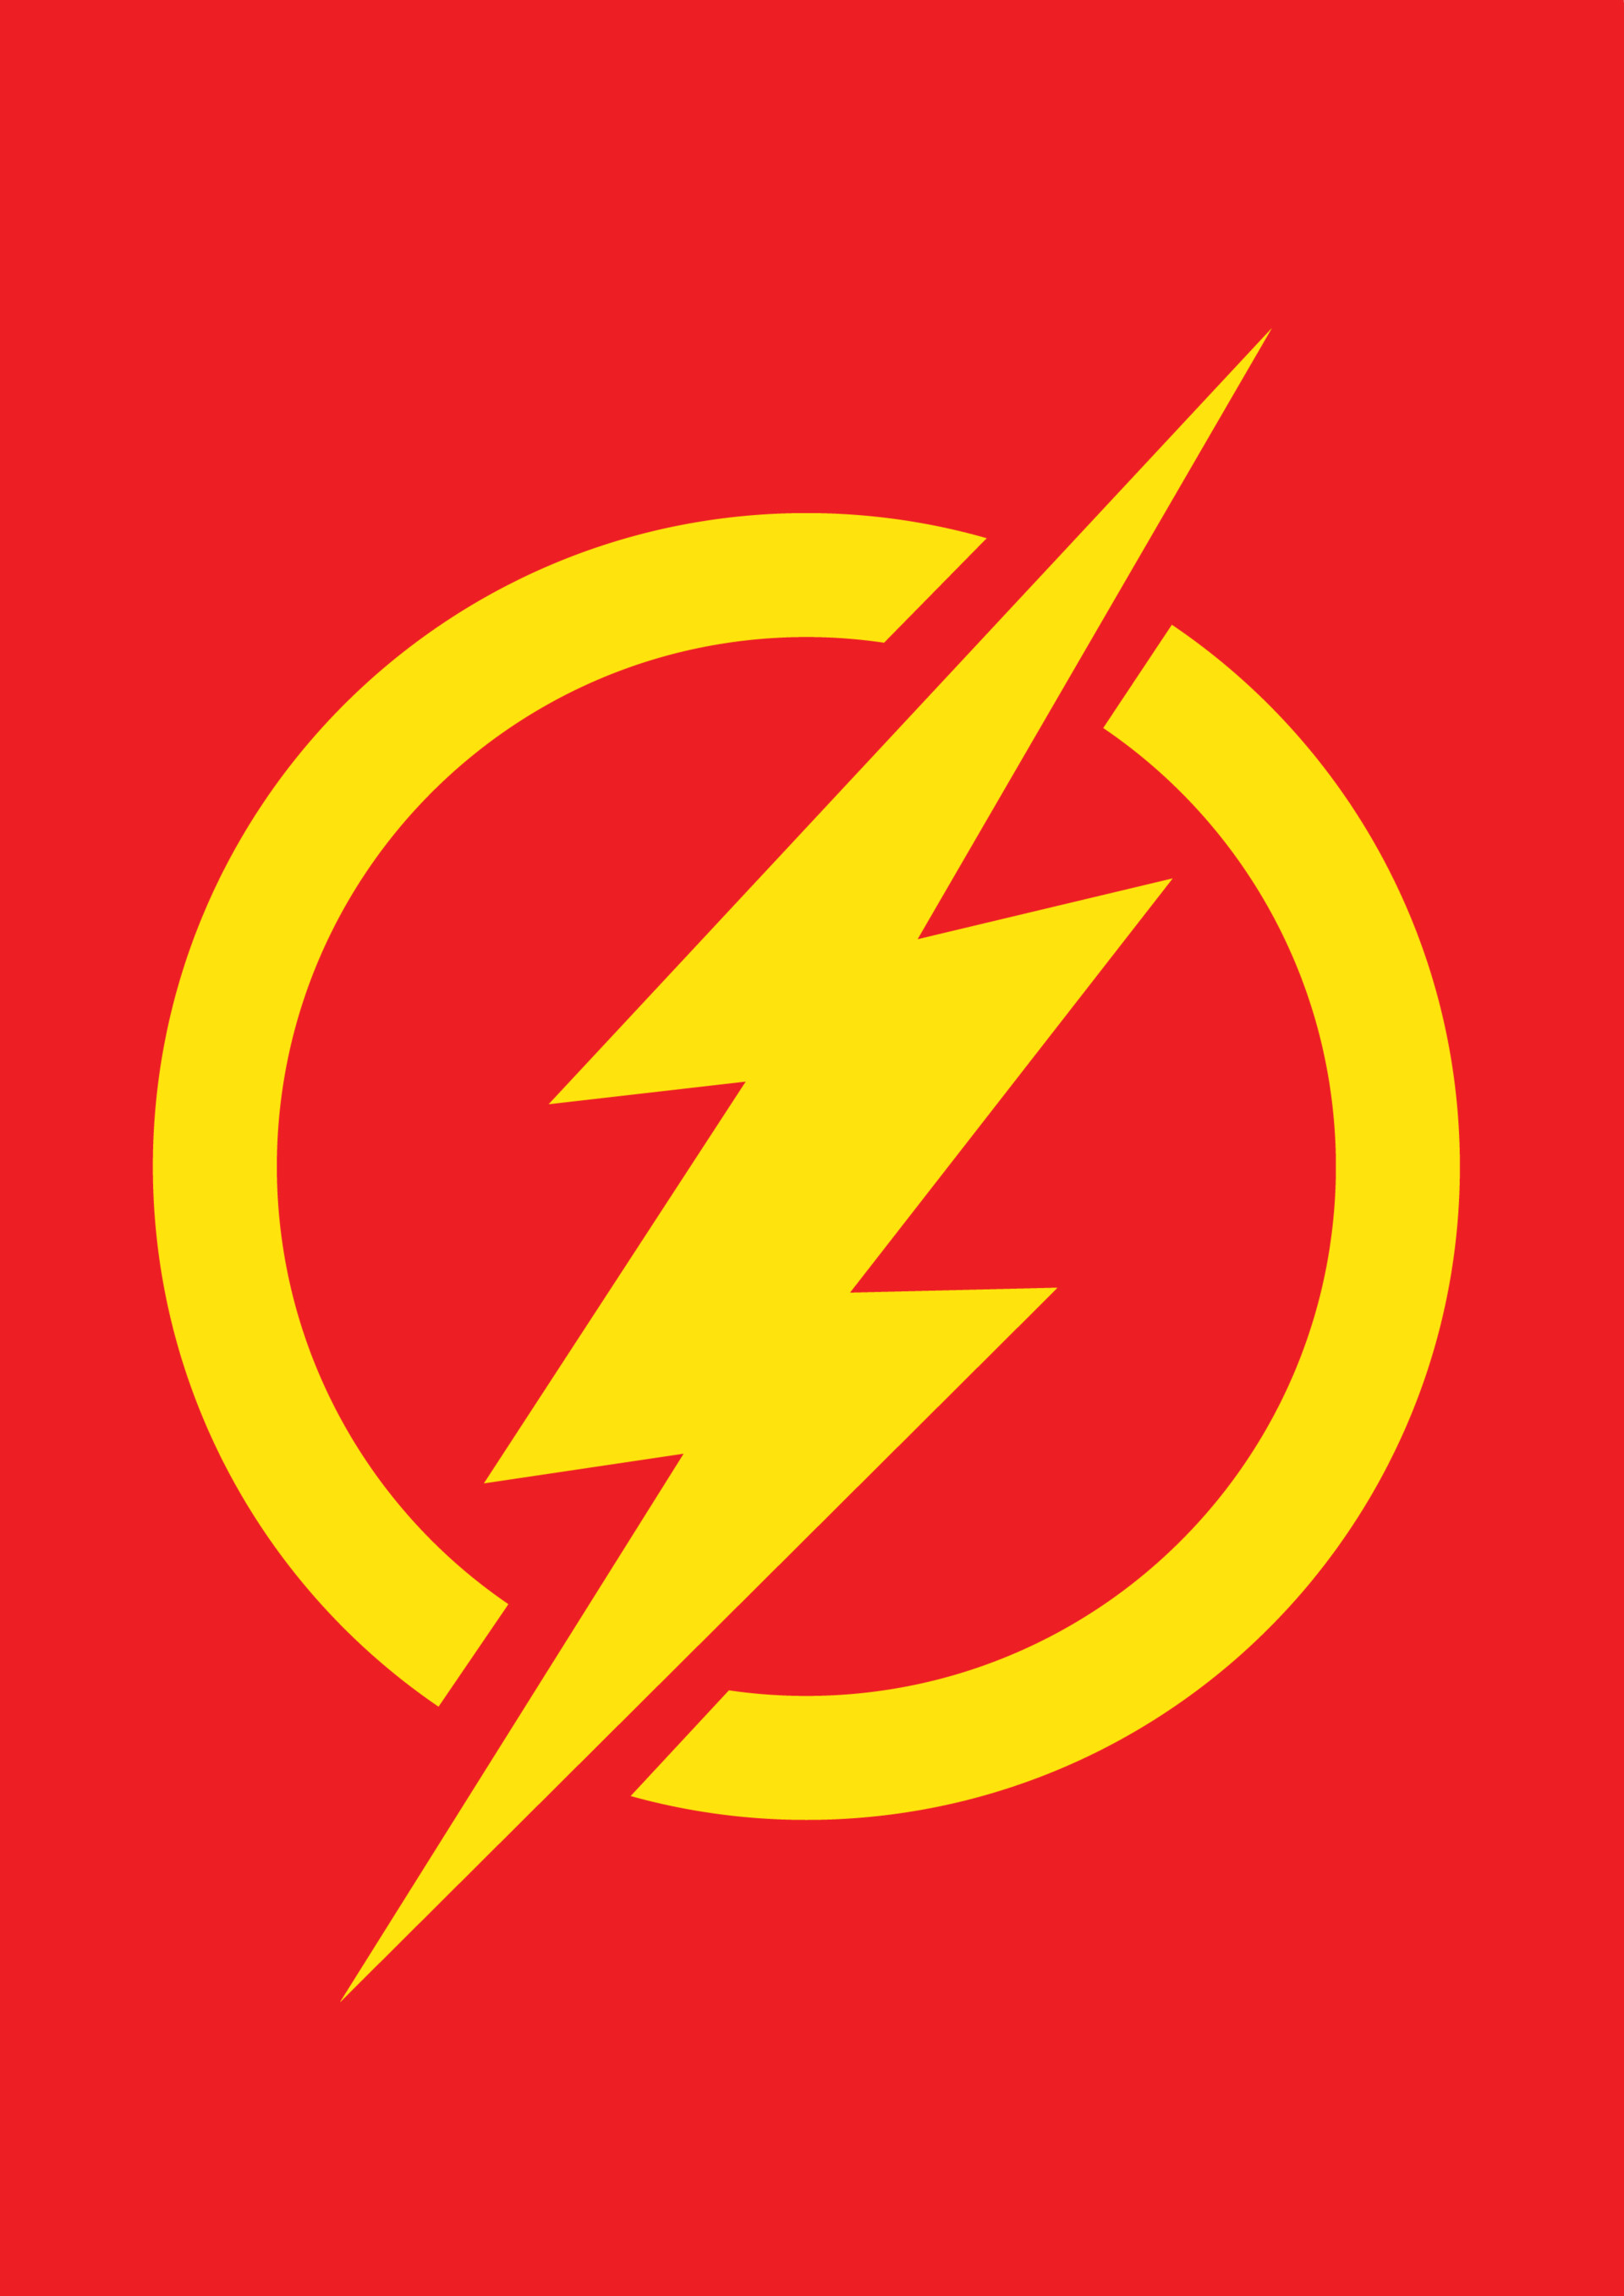 ArtStation - Study of Flash symbol